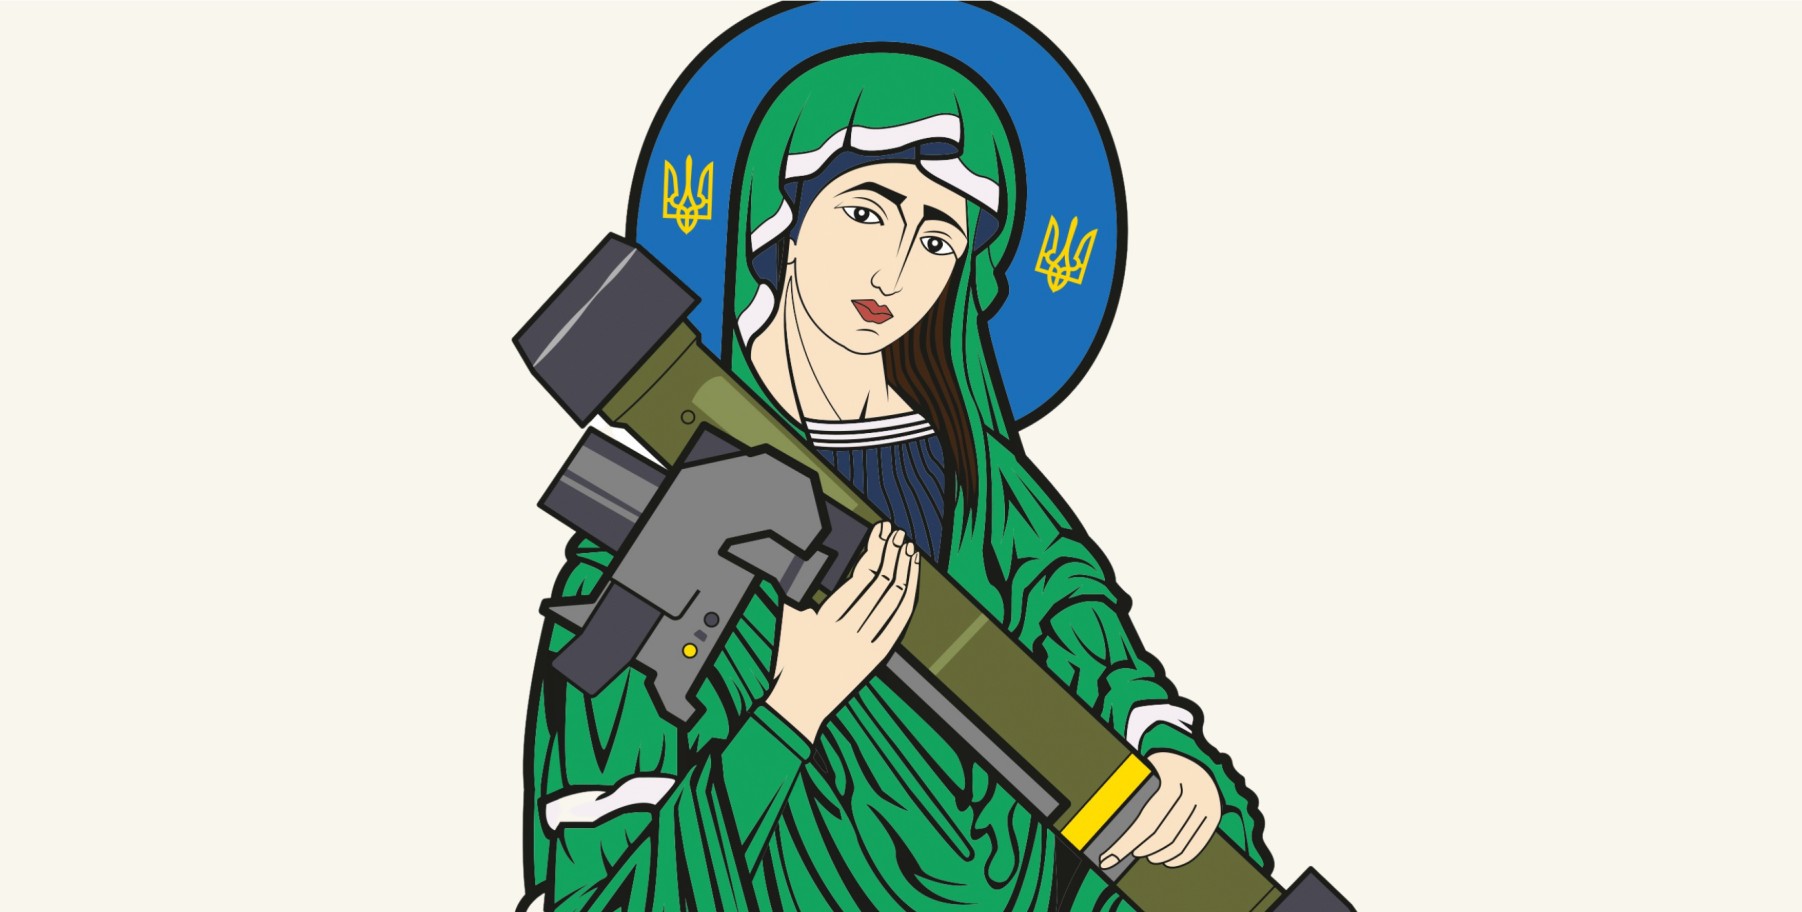 Der Raketenwerfer in den Armen der Madonna heißt Javelin, daher der Name der Ikone: Sankt Javelin (Foto: Saint Javelin)